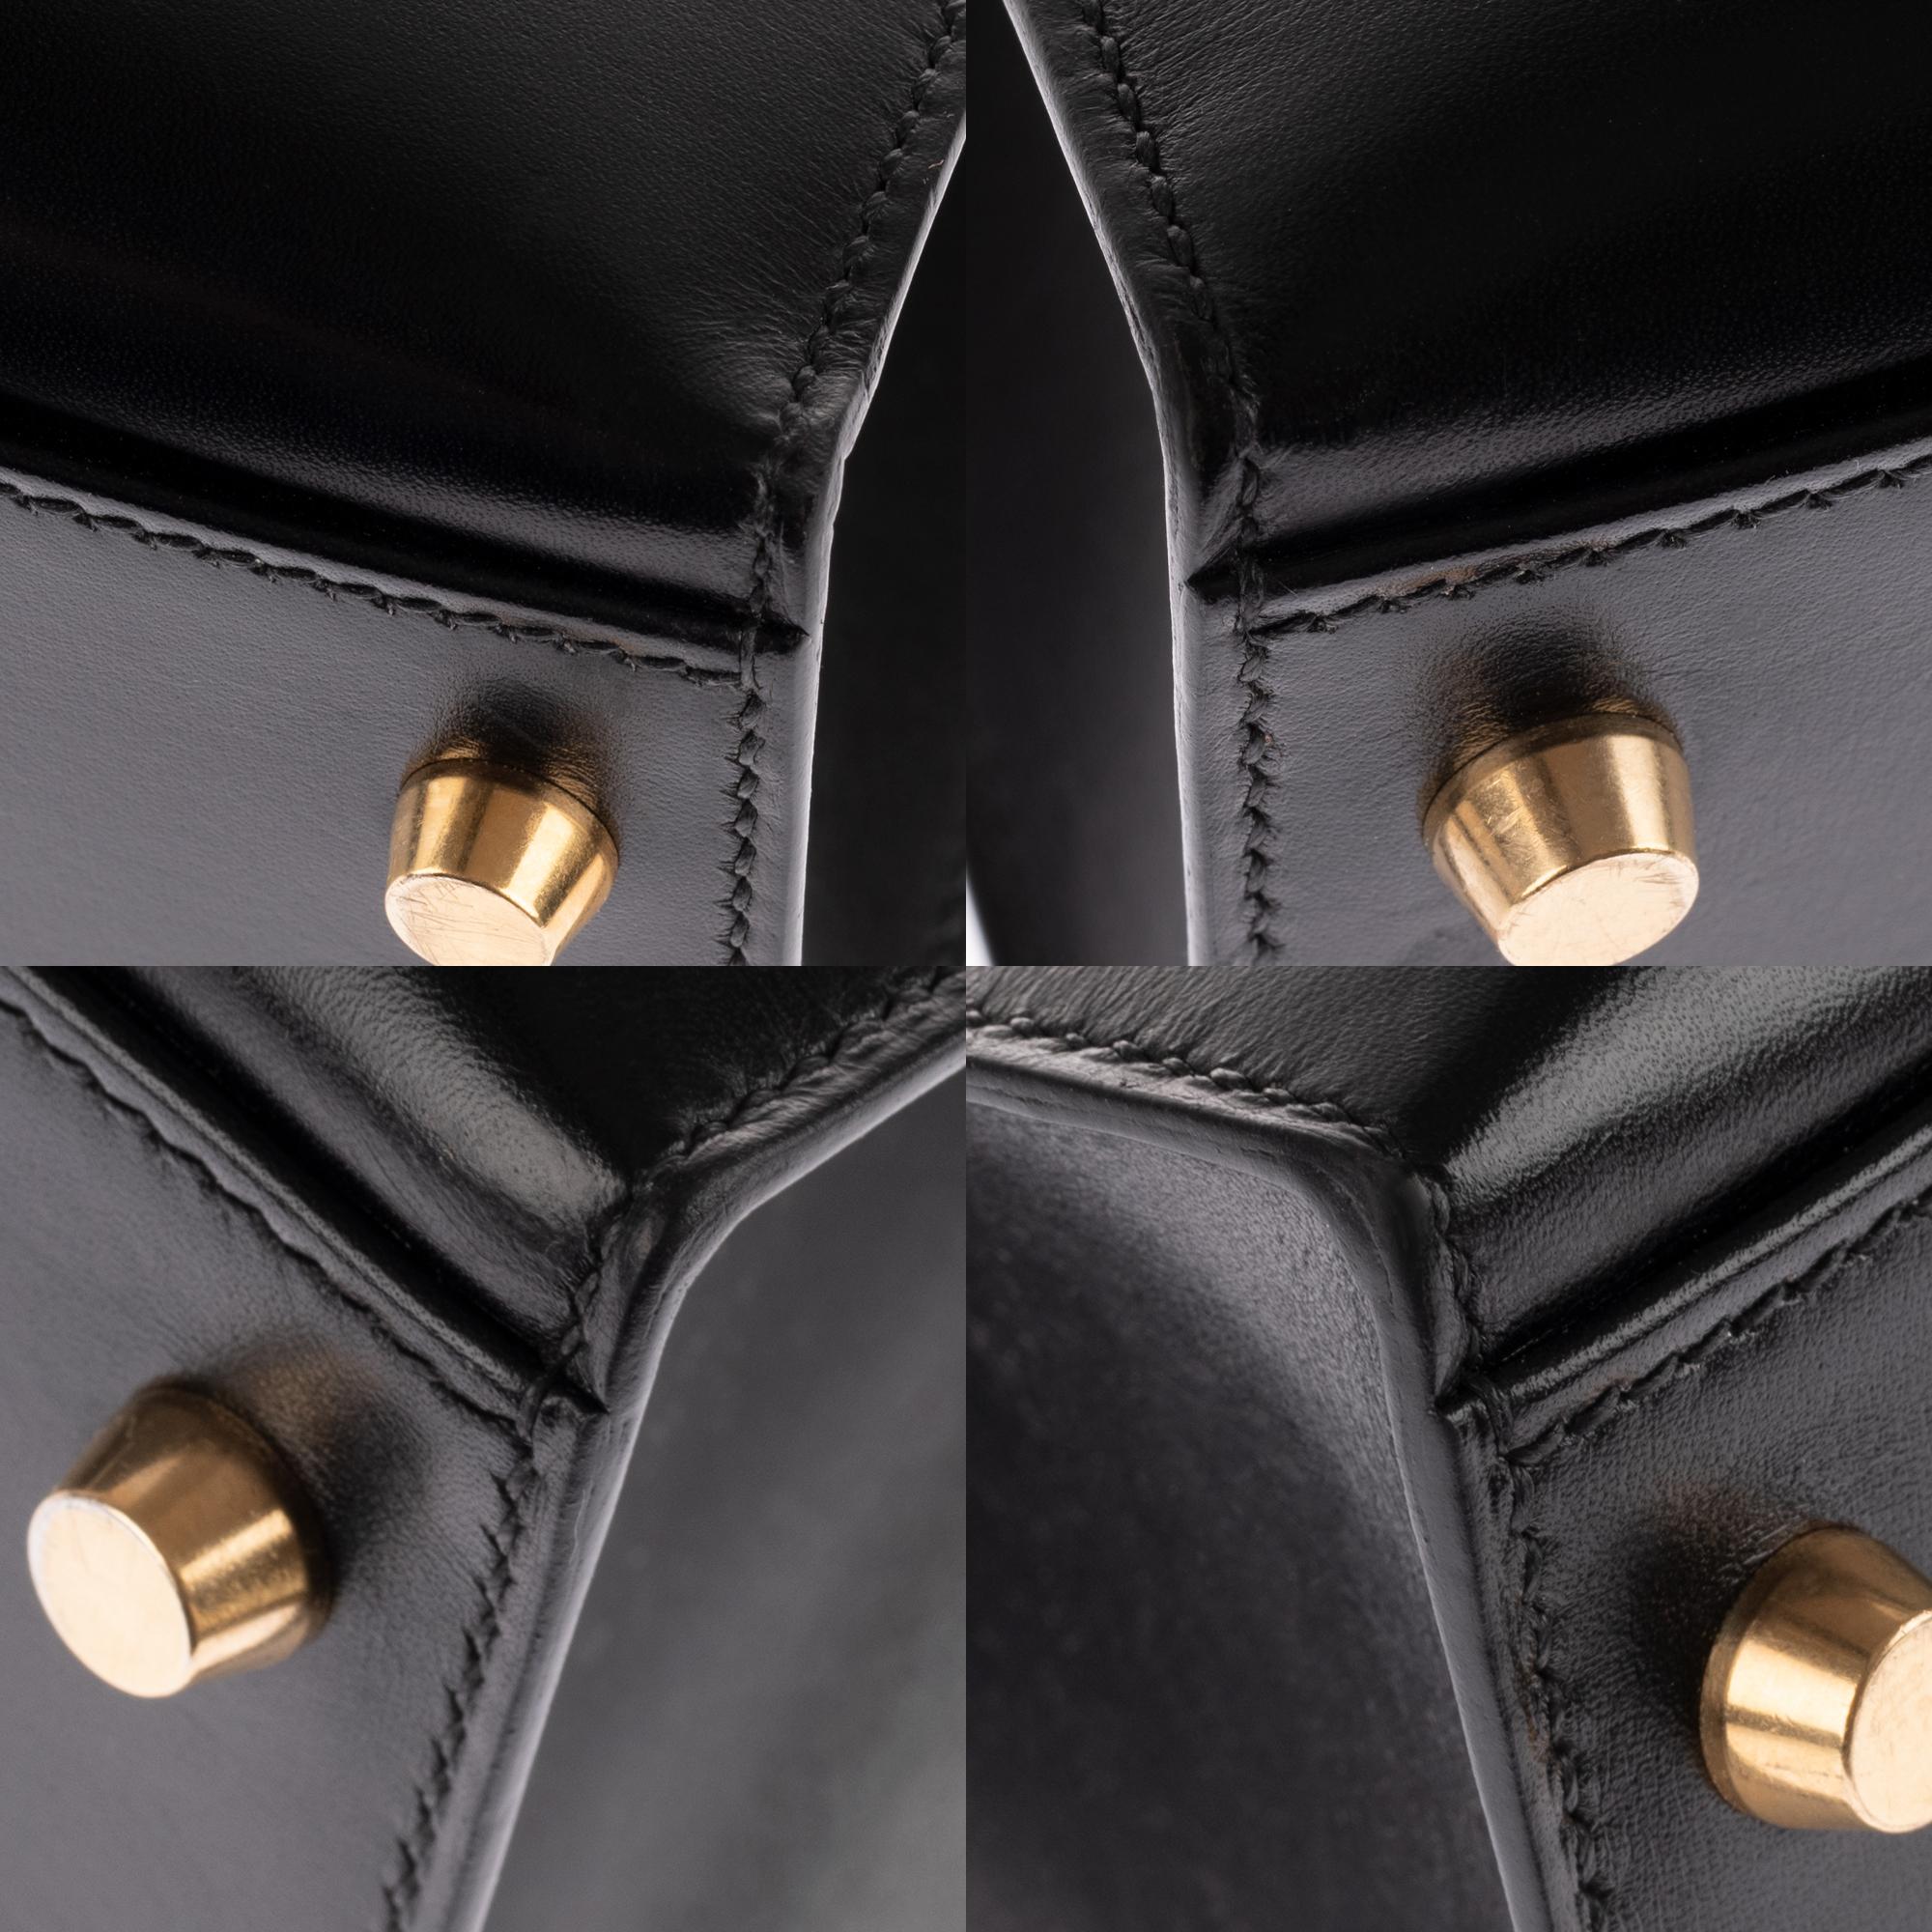 Very limited Handbag Hermès Kelly sellier 32 with strap in black calfskin, GHW! 6